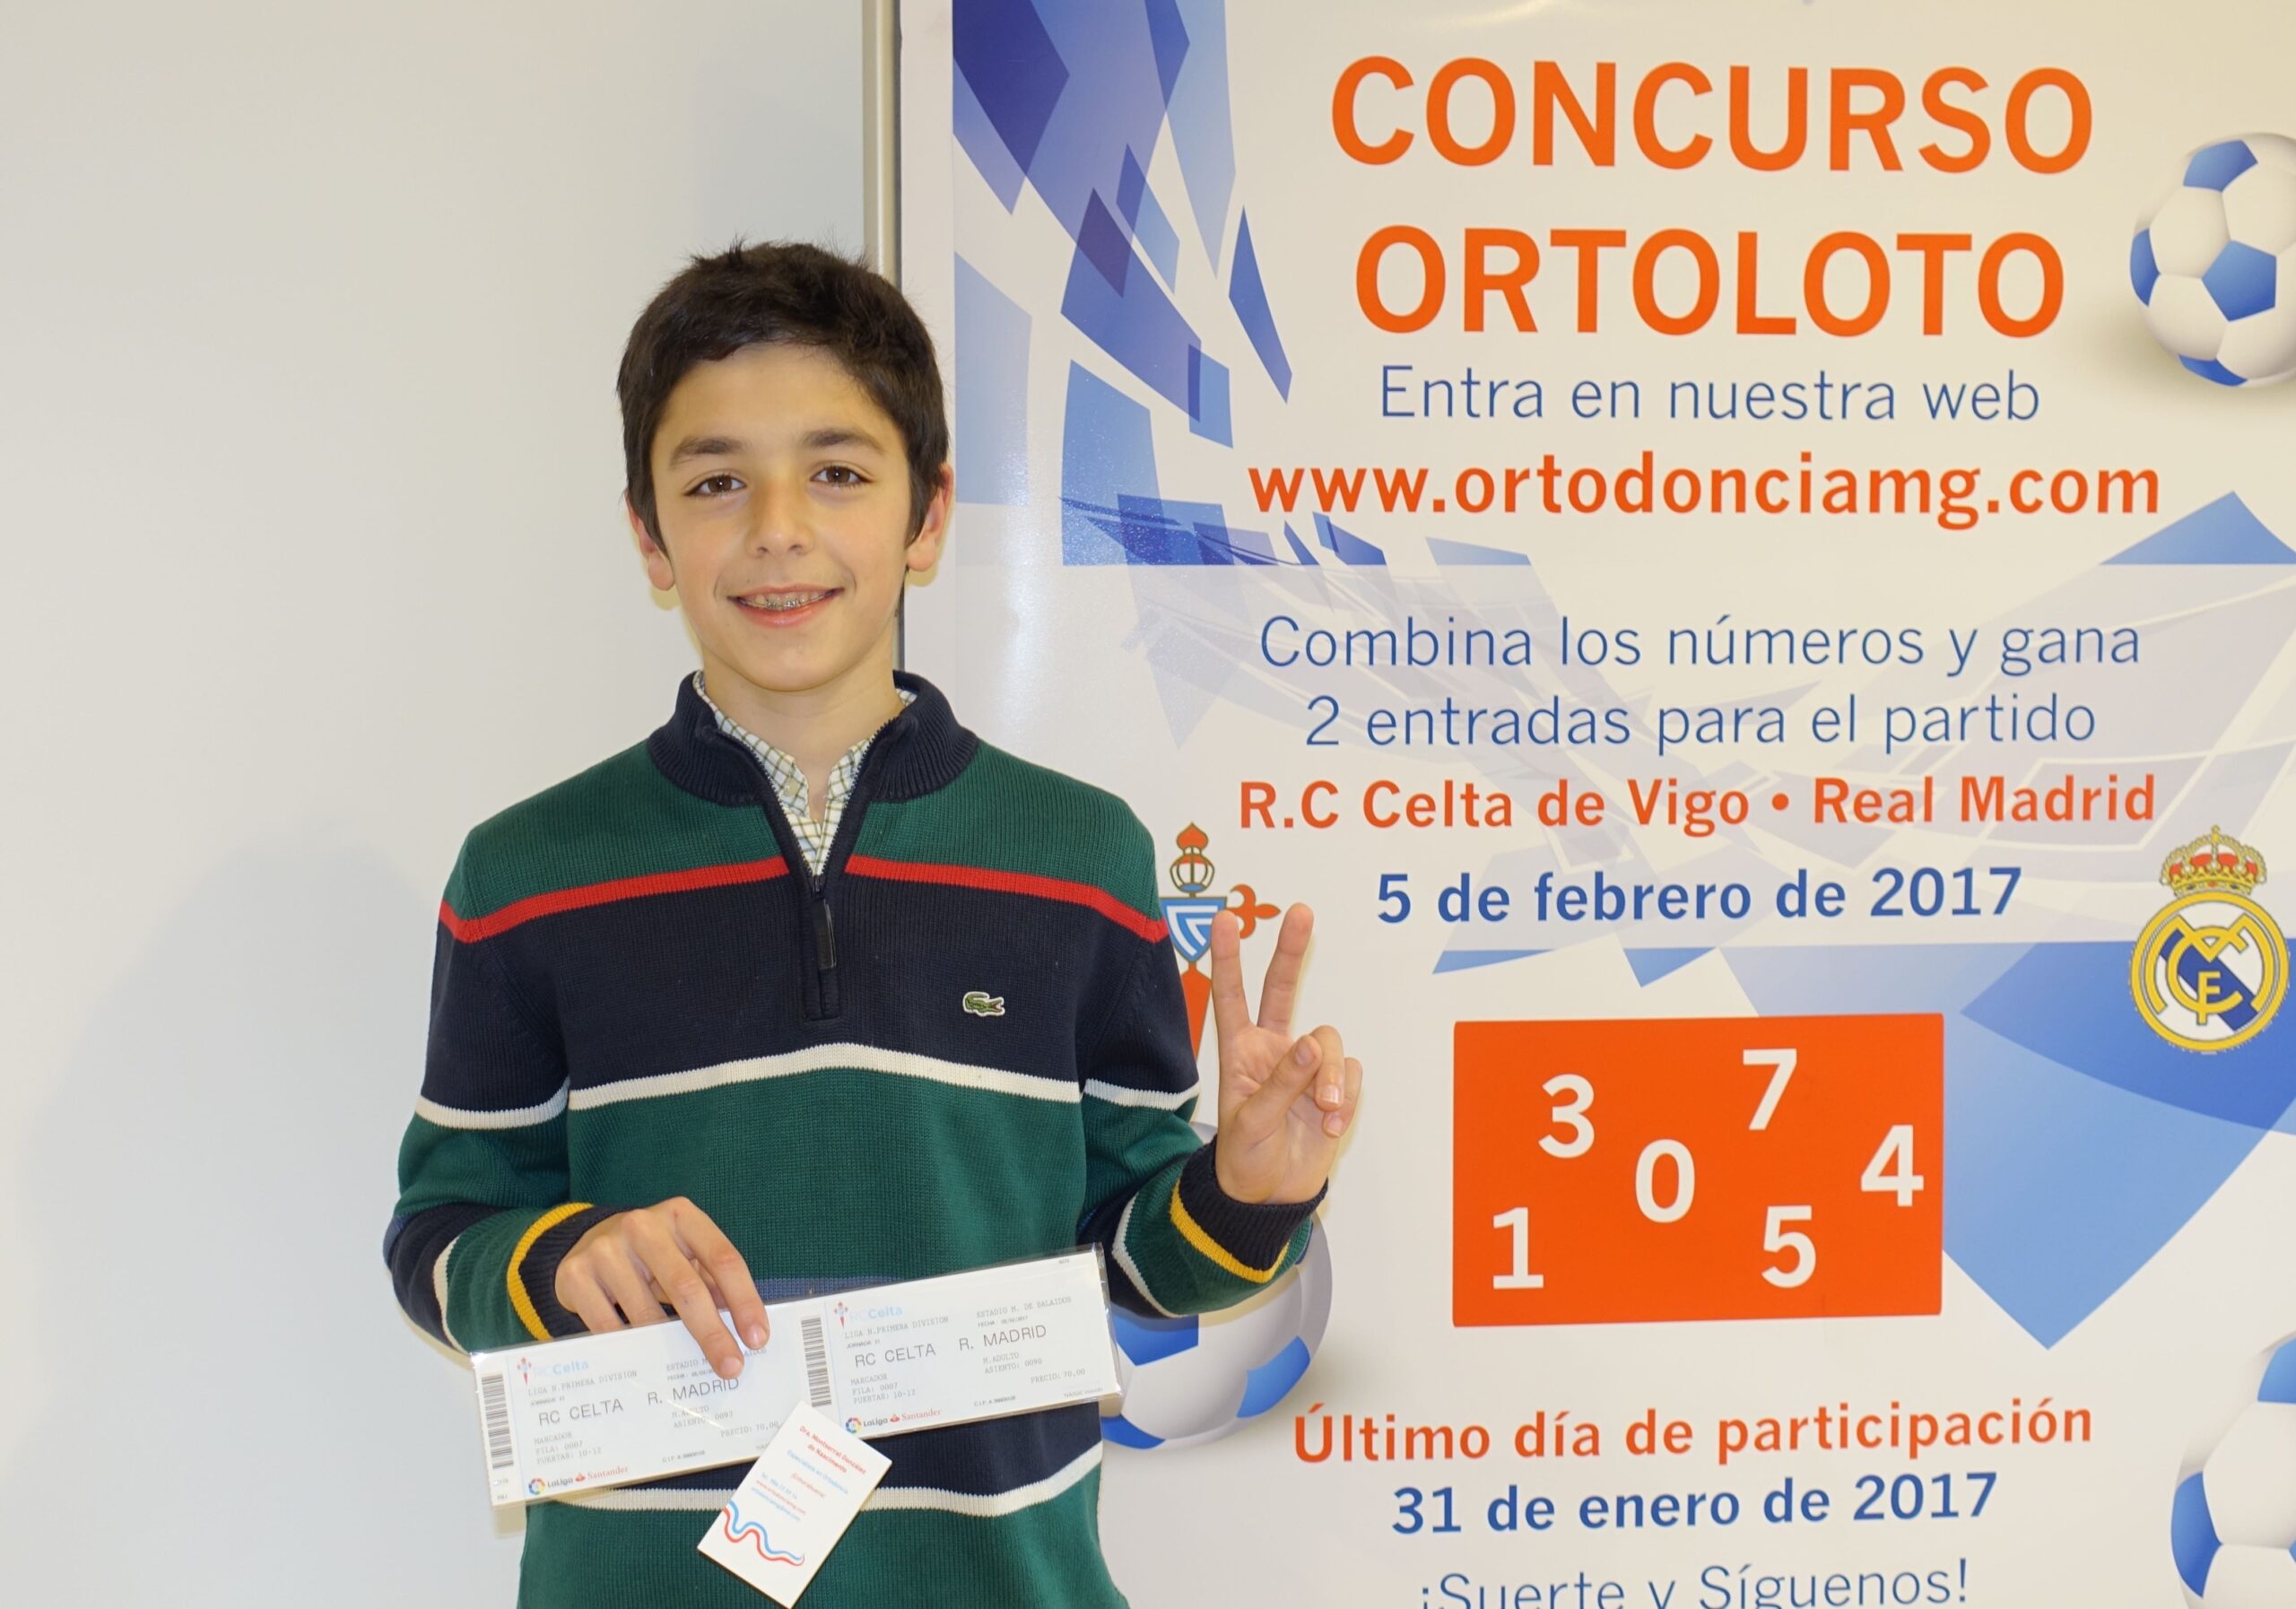 Ortodoncia MG. Vigo, Pontevedra